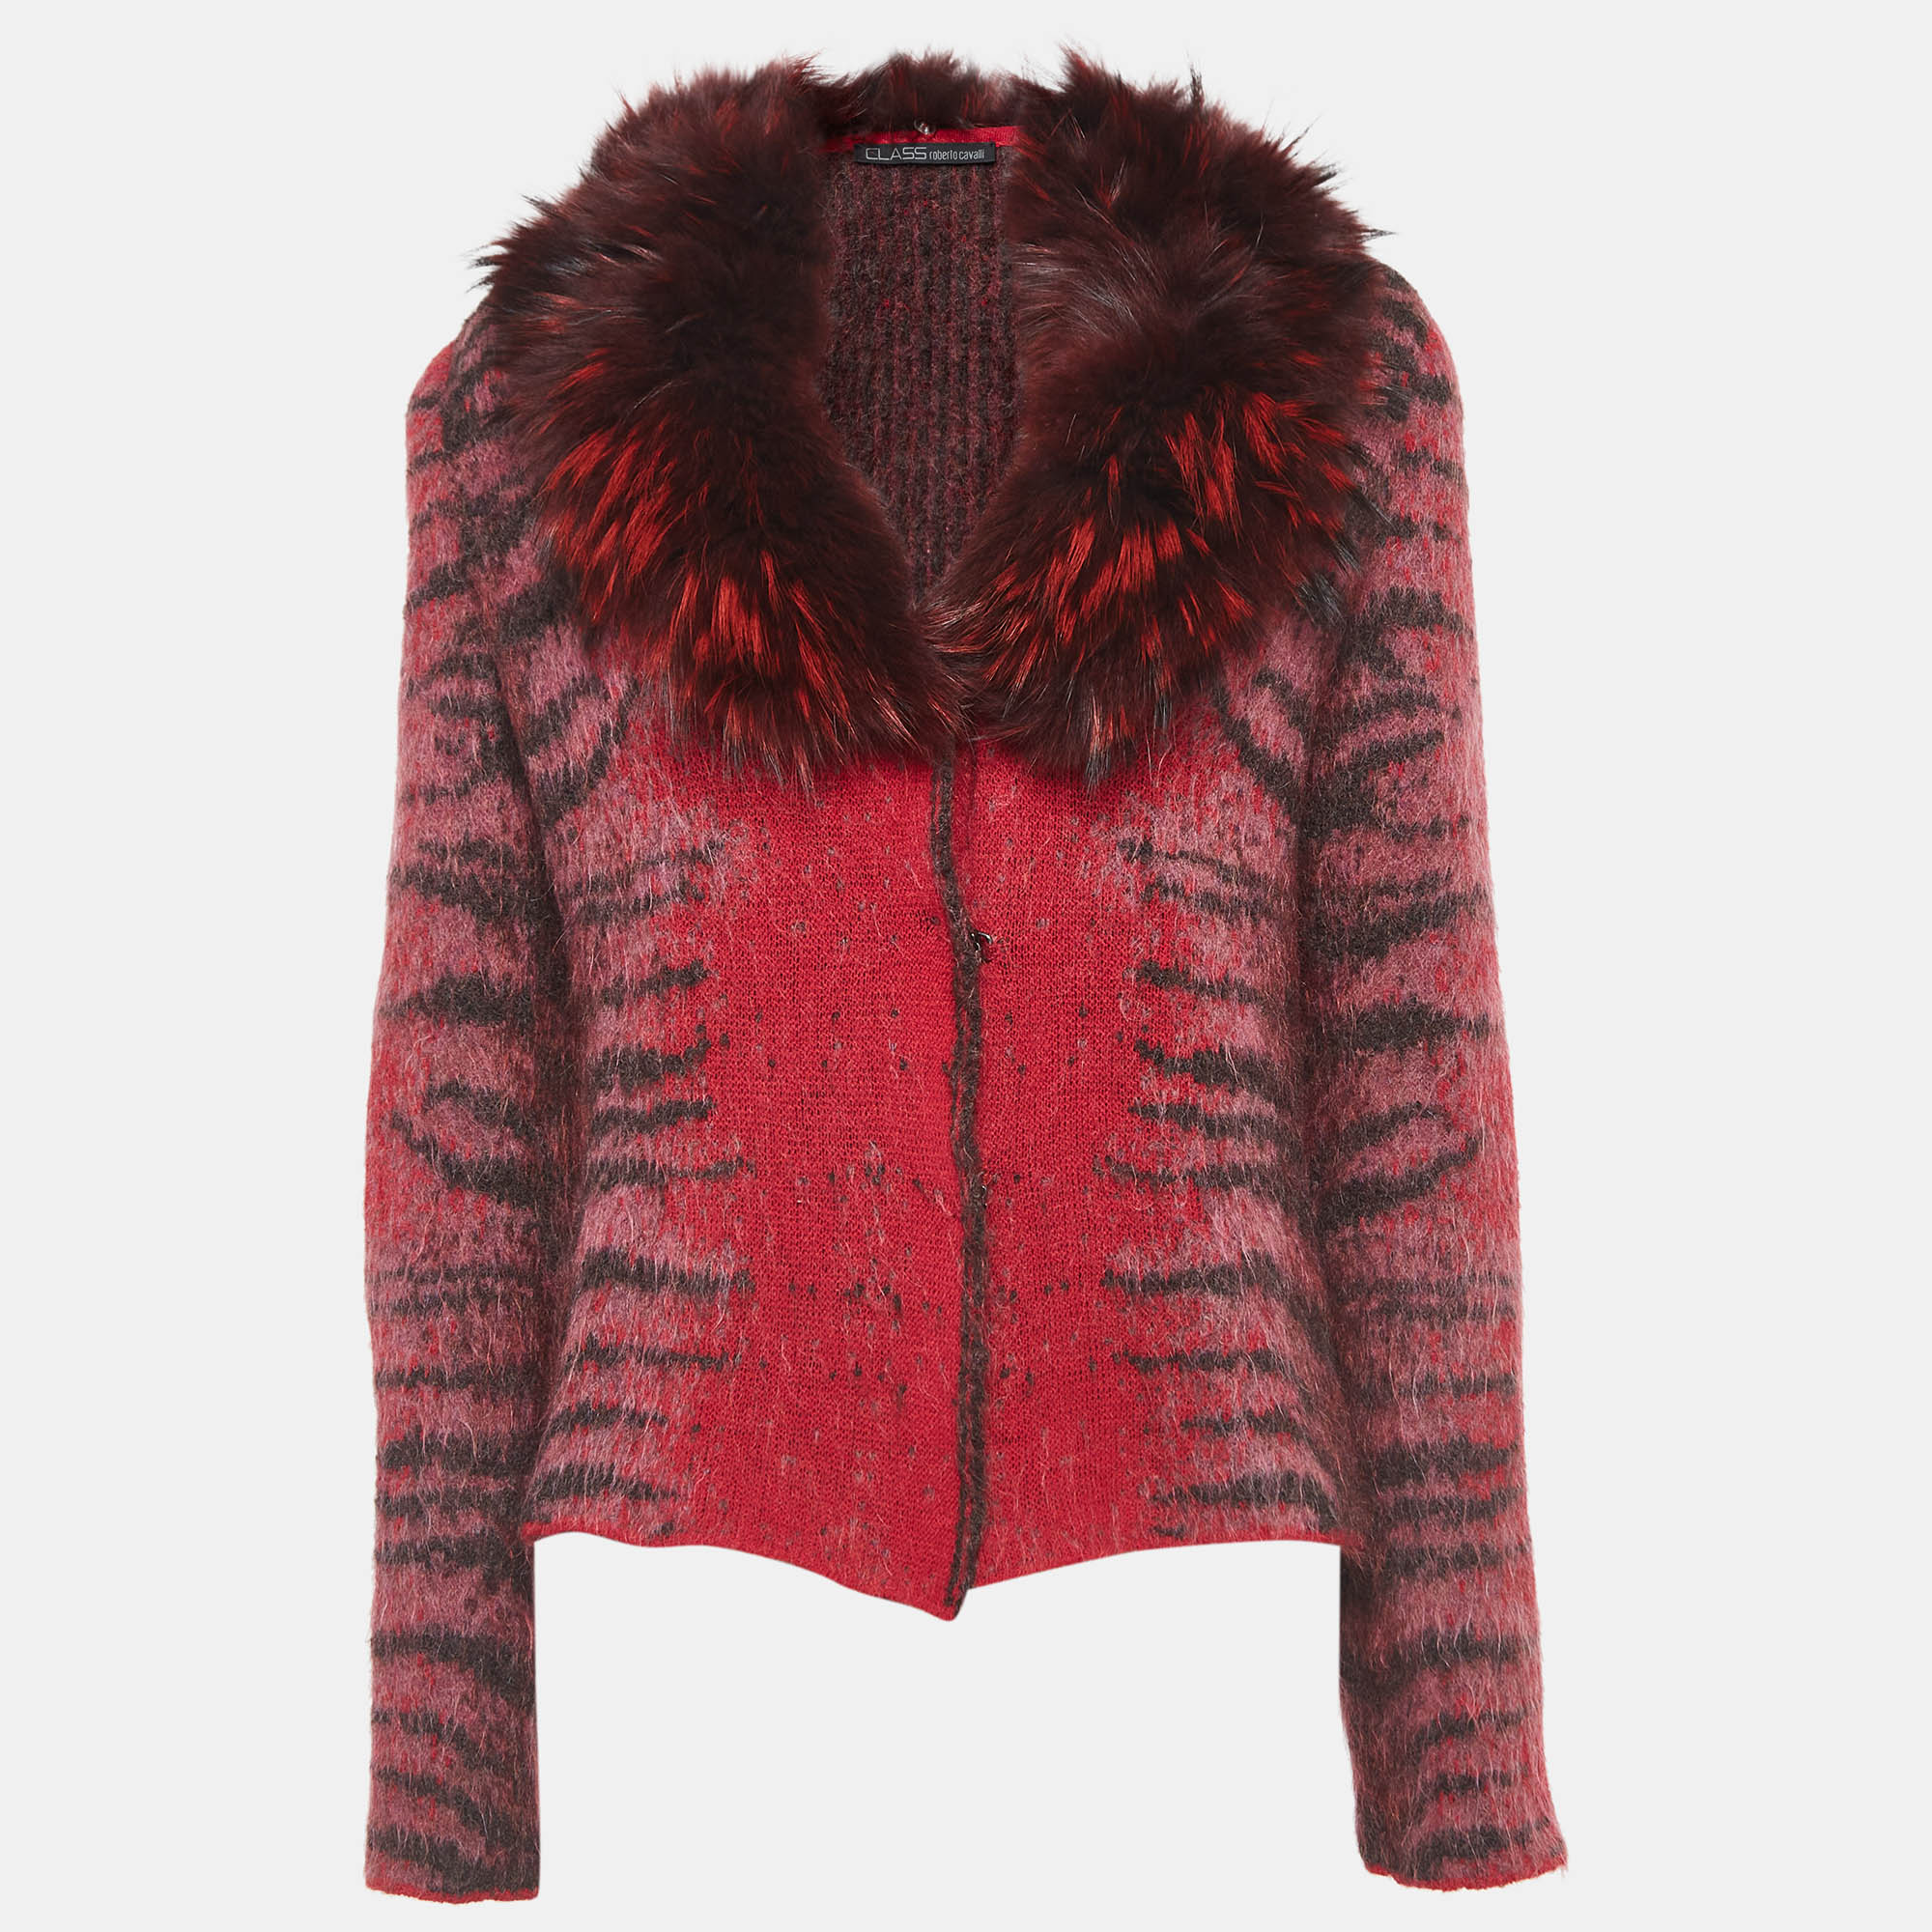 Class by roberto cavalli red animal pattern fur trim collar jacket m